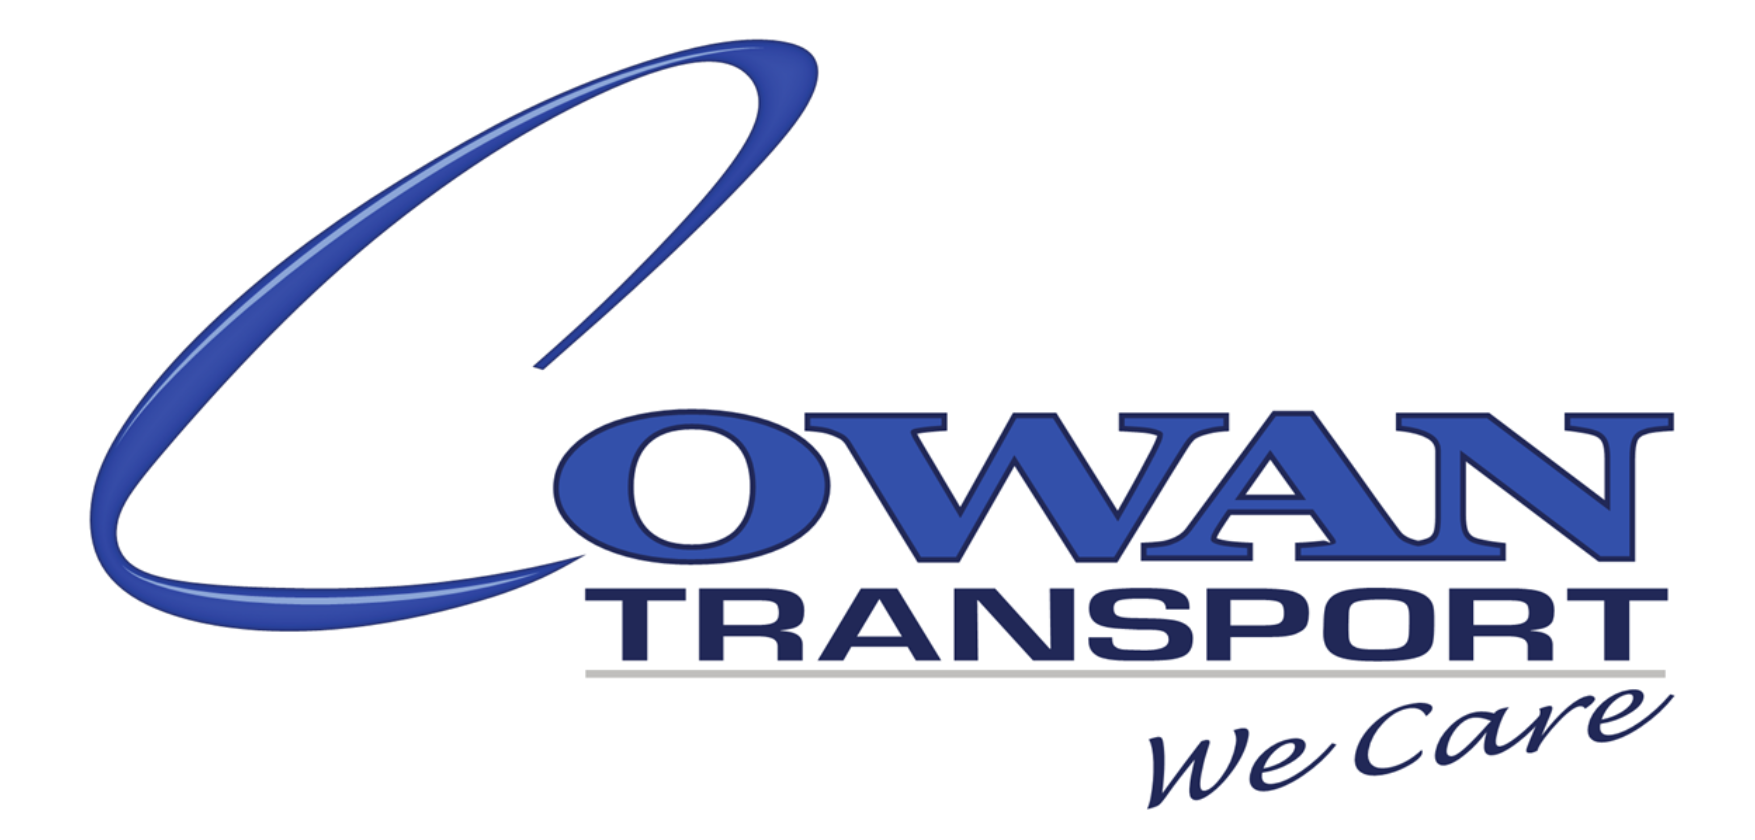 Cowan Transport